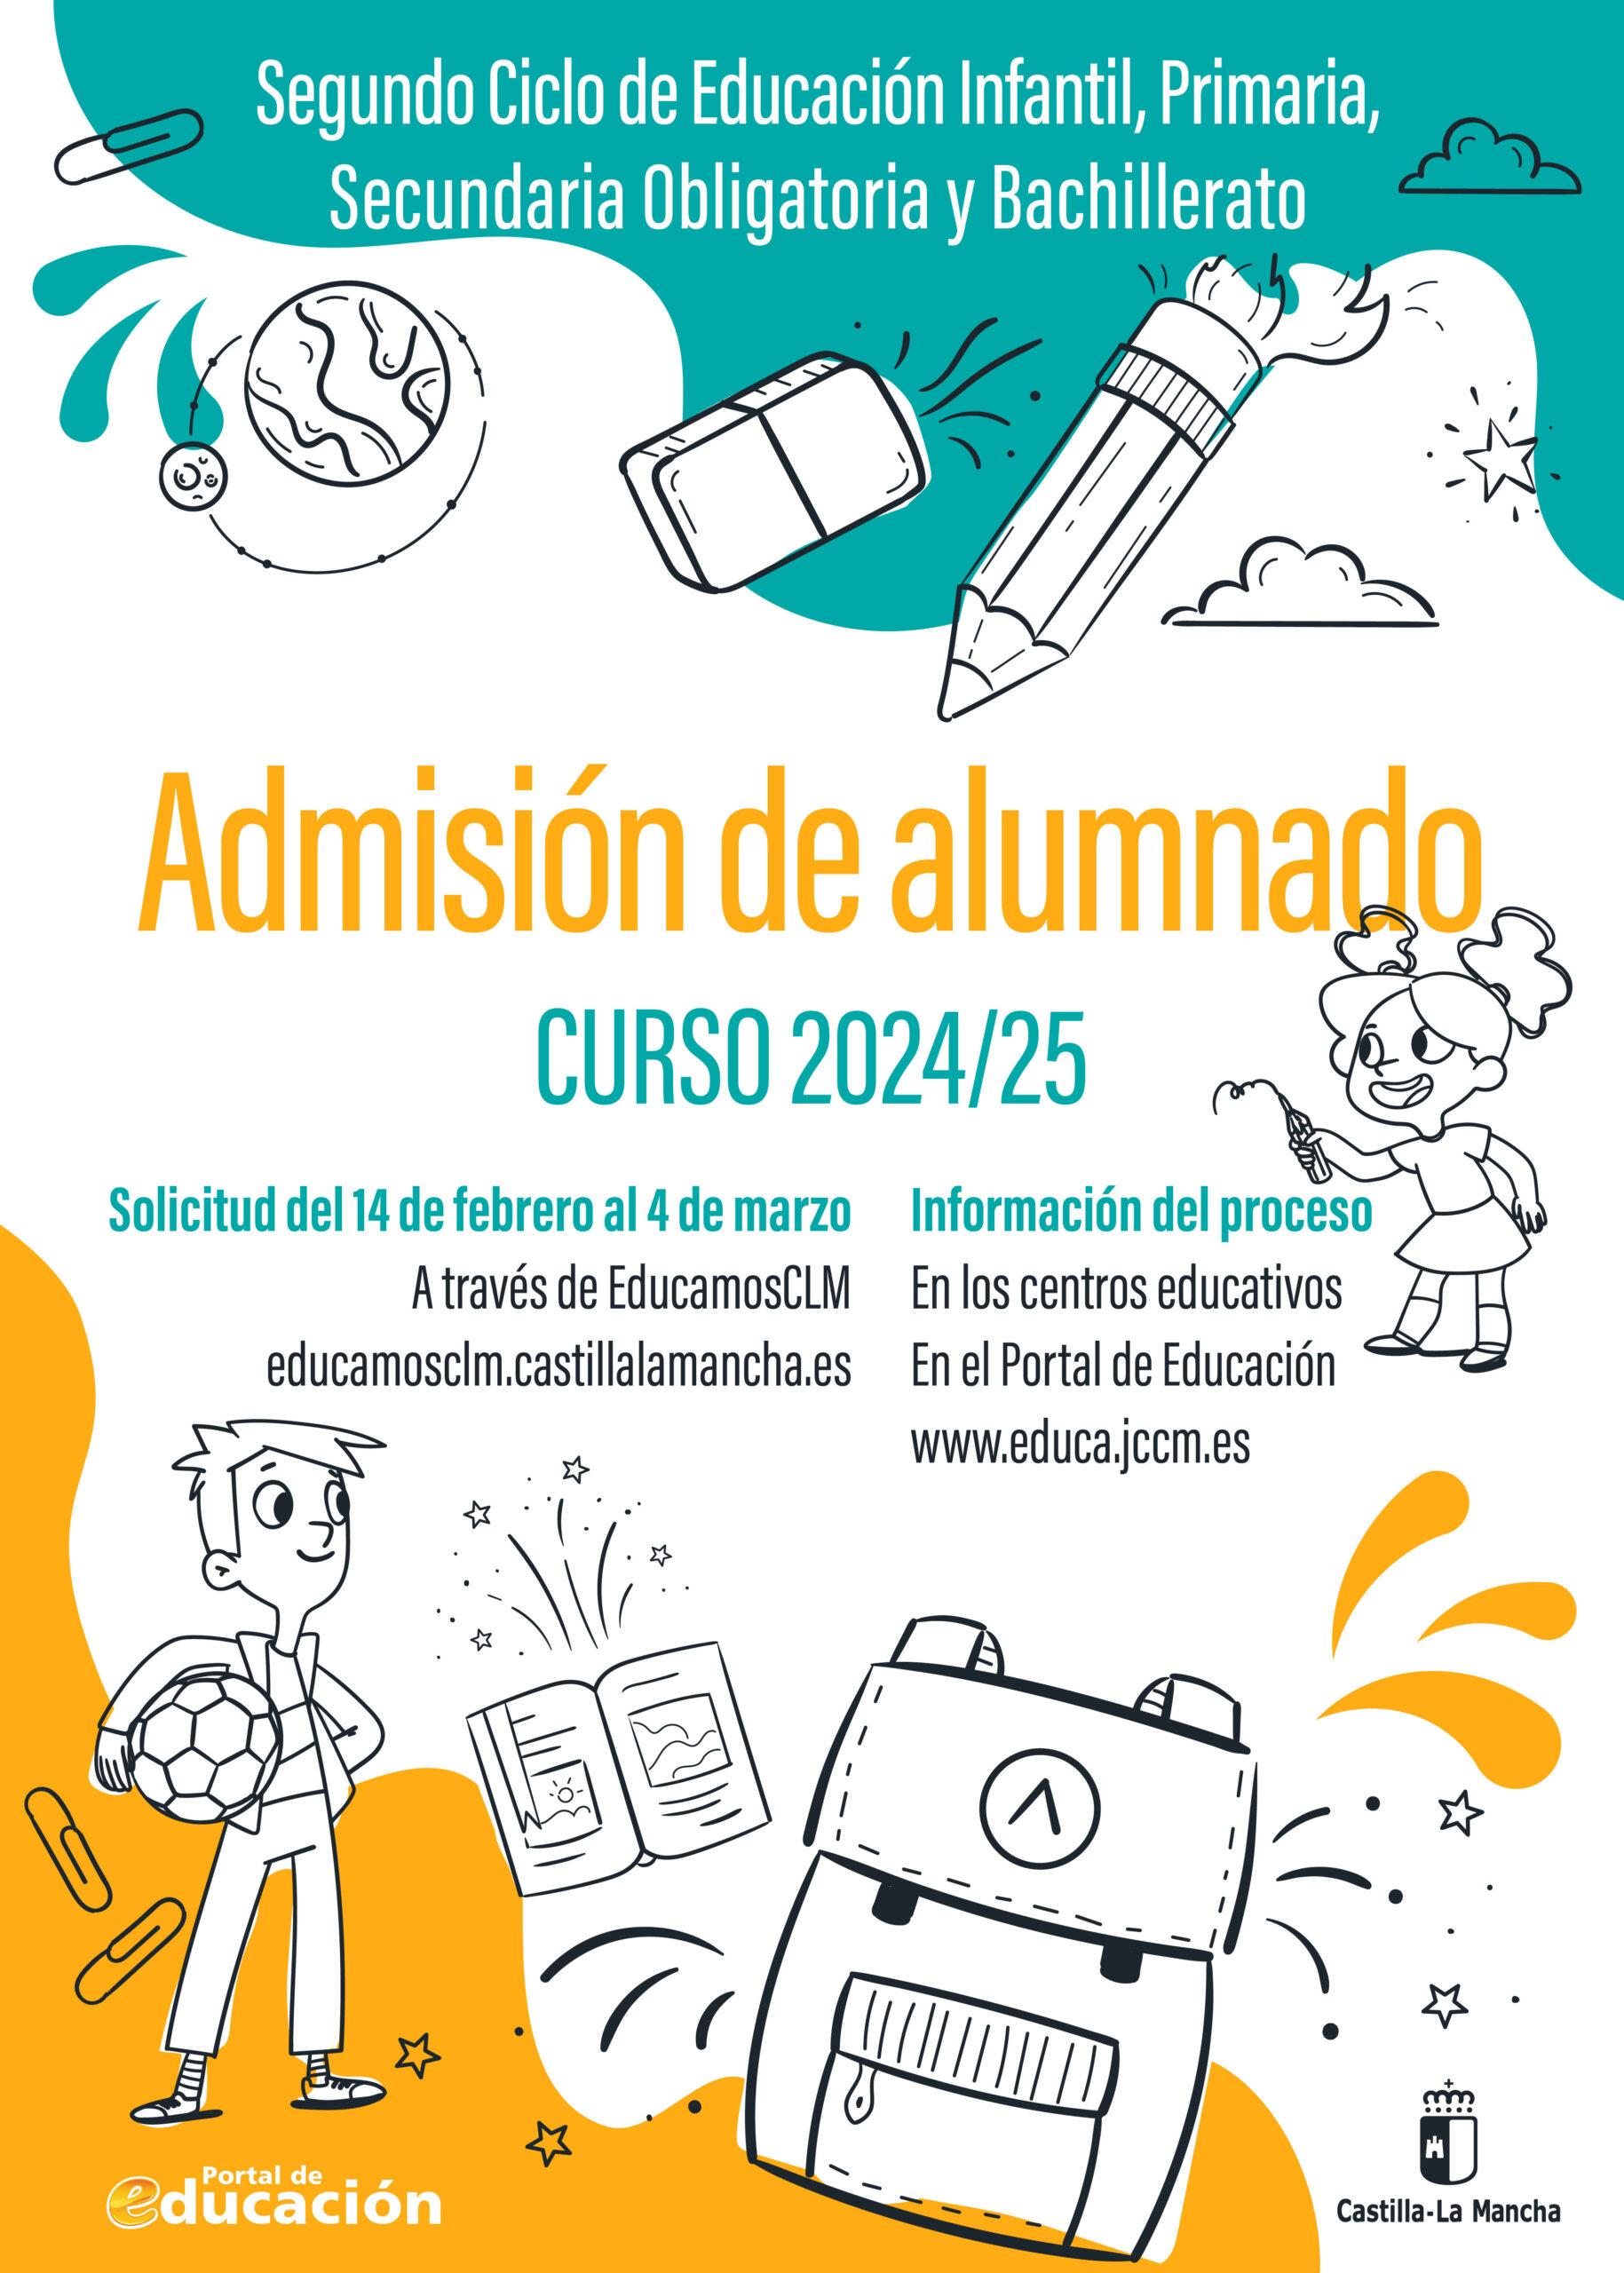 https://www.educa.jccm.es/es/admision/admision-2-ciclo-infantil-primaria-bachillerato/guias-proceso-